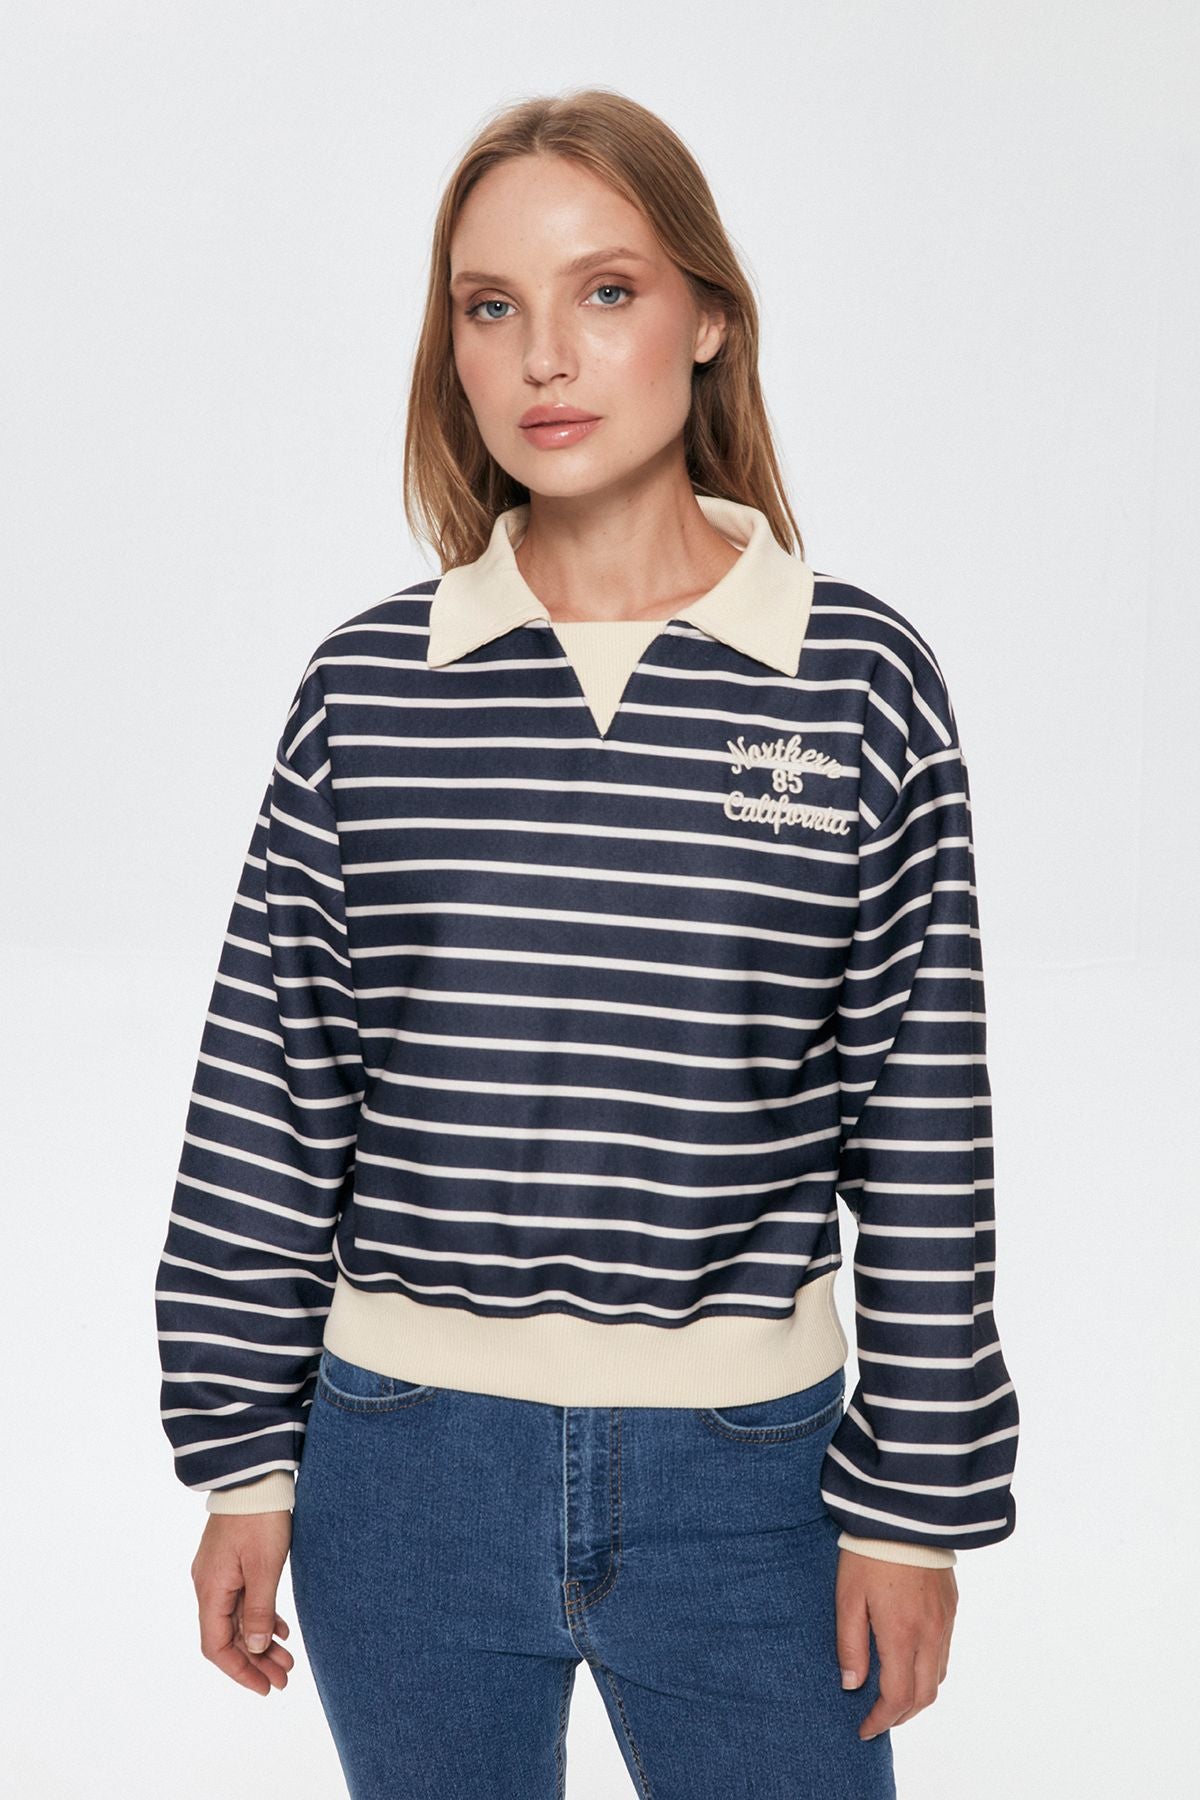 Shirt Collar Striped Sweatshirt Navy Blue